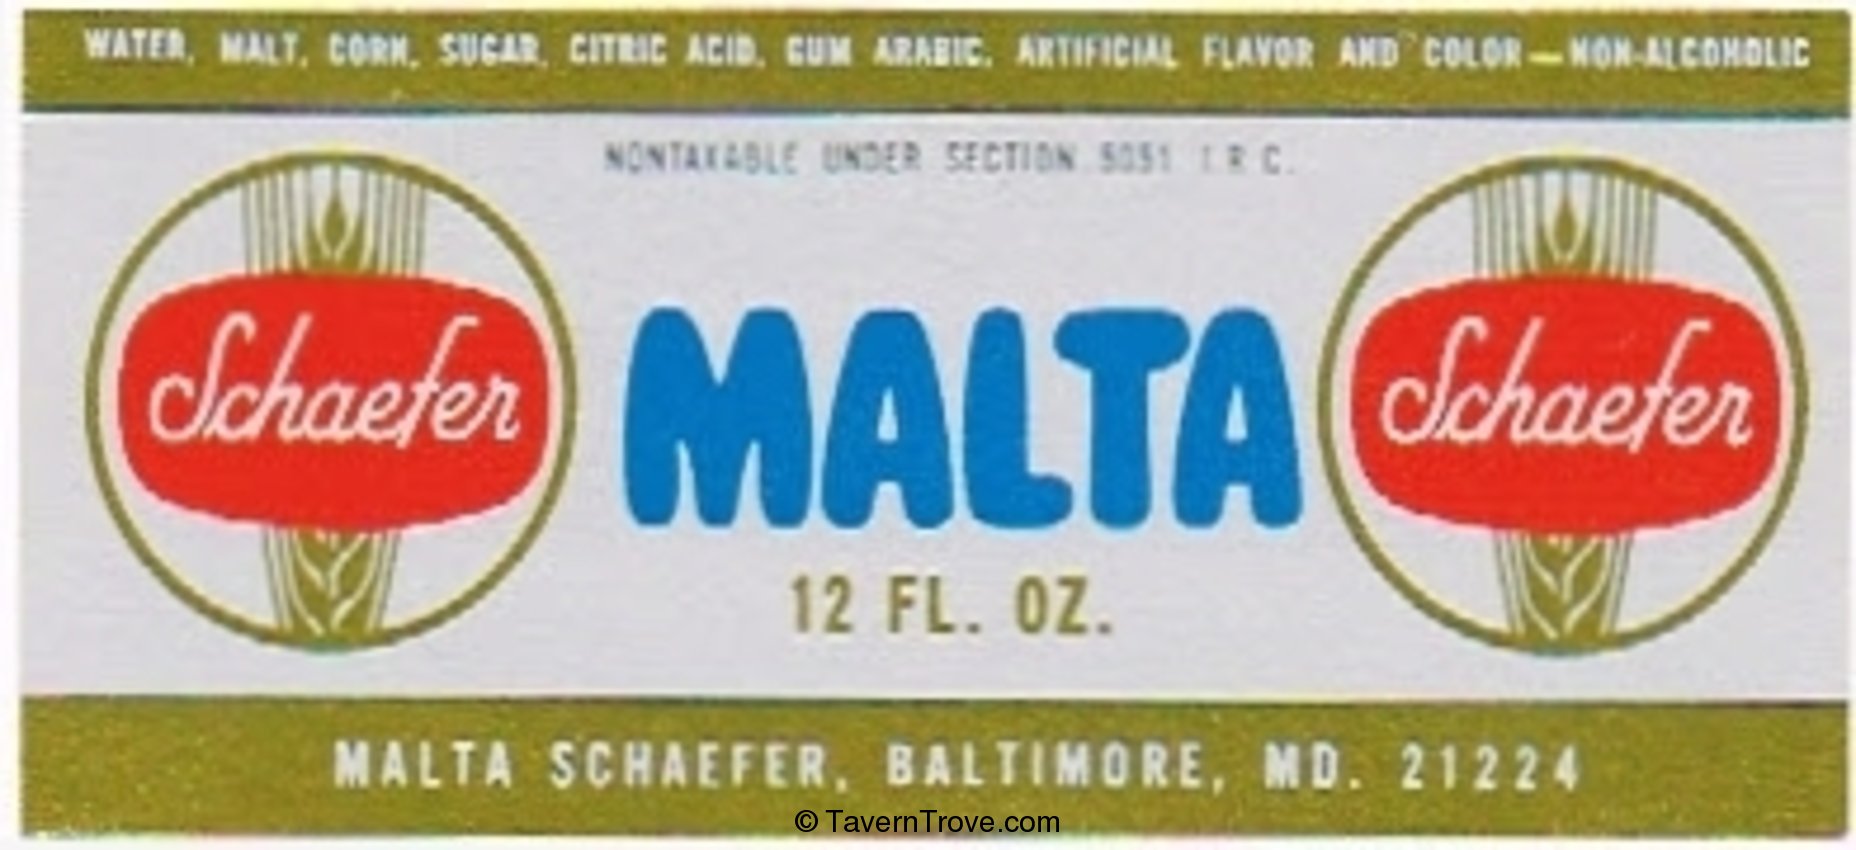 Schaefer Malta